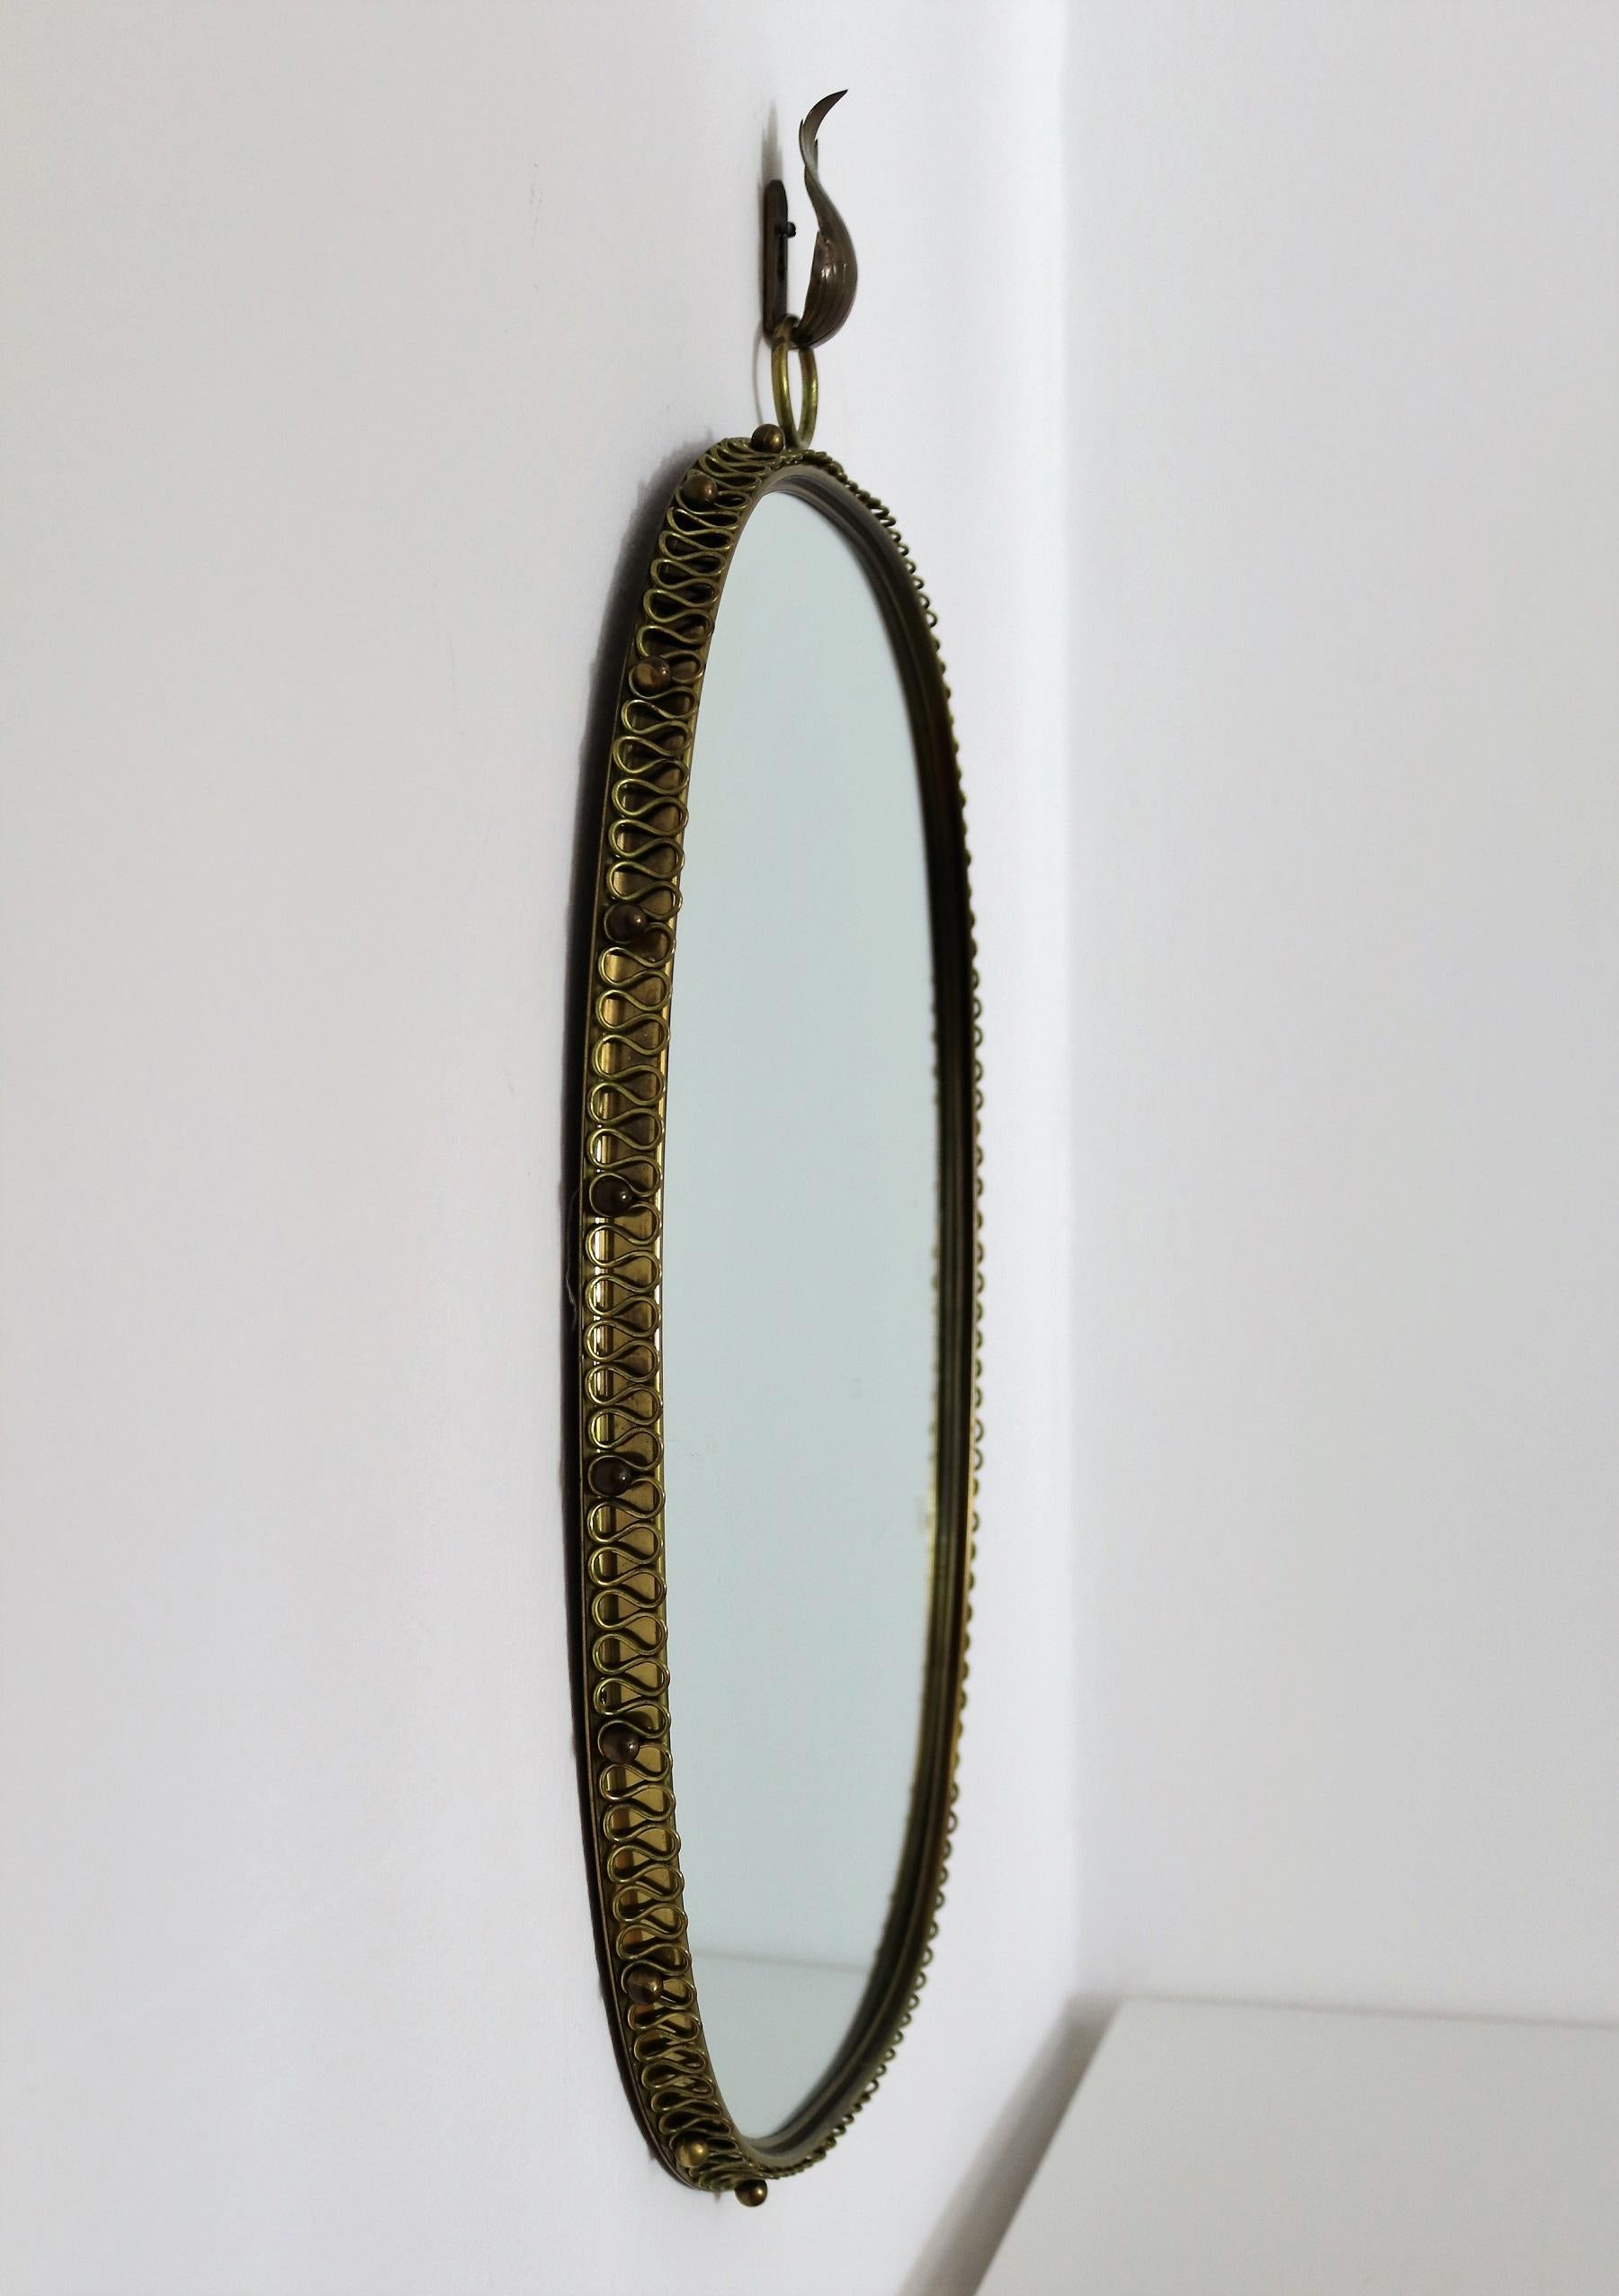 Swedish Midcentury Brass Wall Mirror by Josef Frank for Svensk Tenn, 1950s